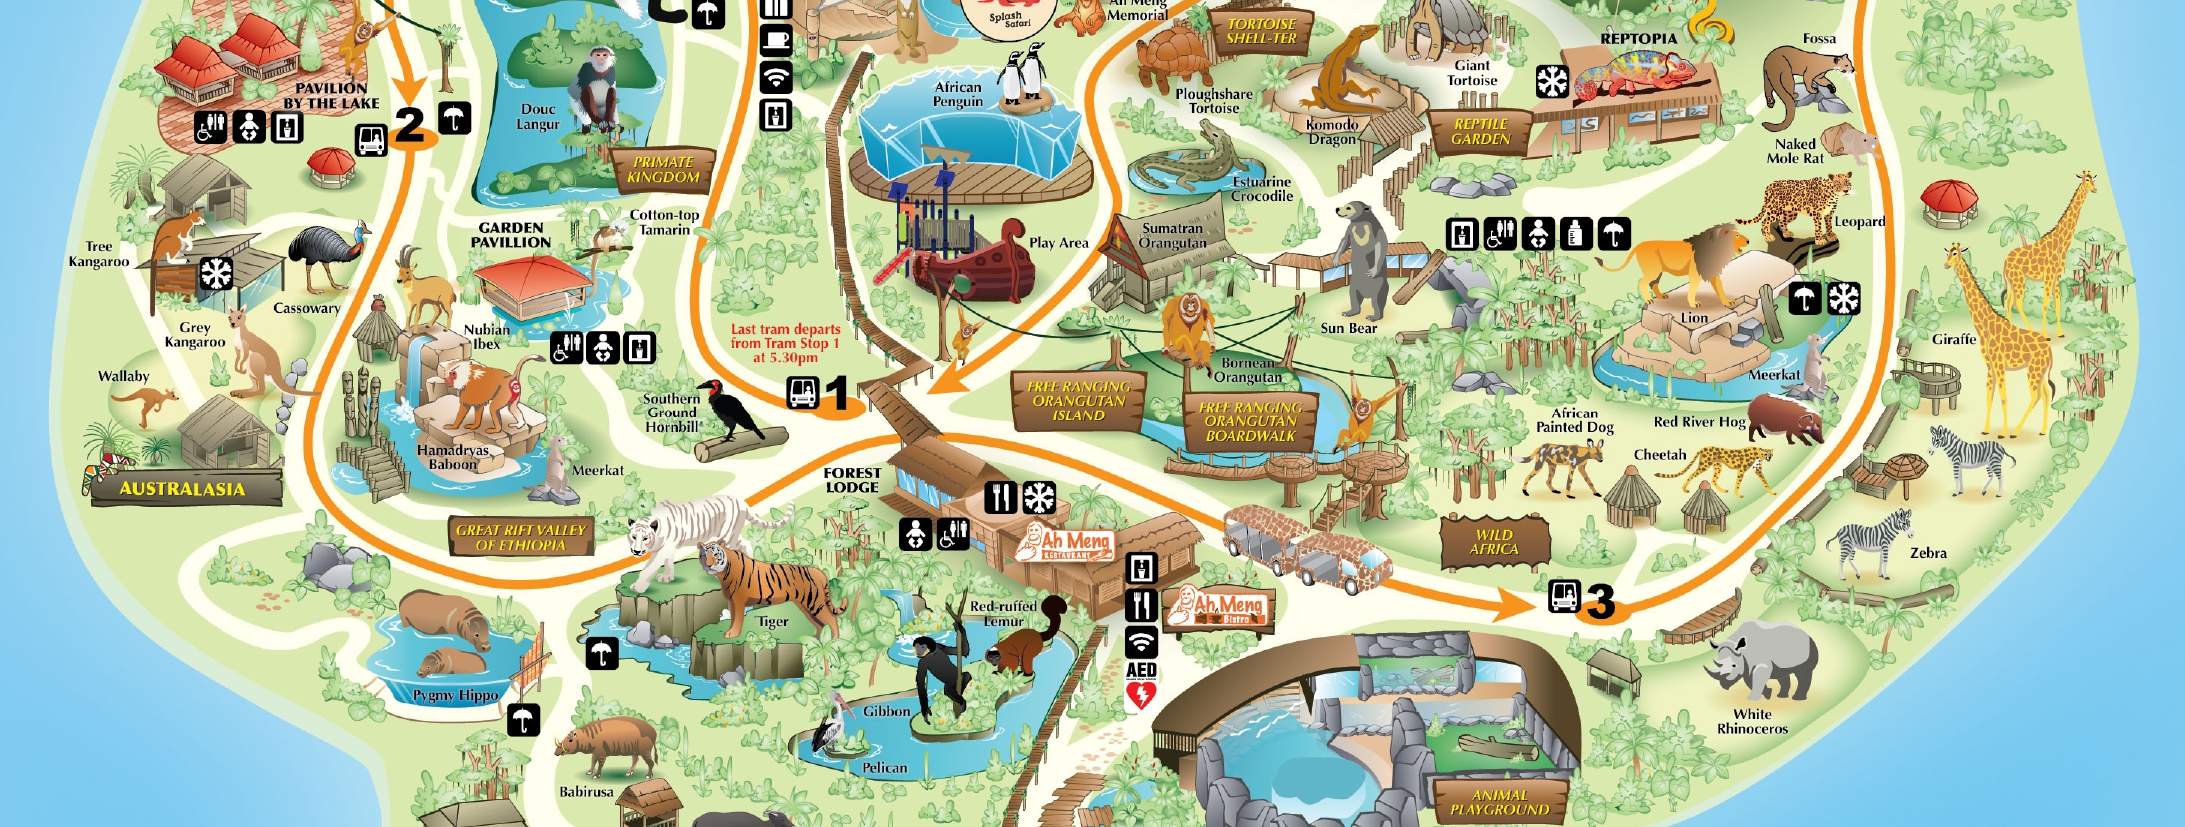 singapore zoo map in english